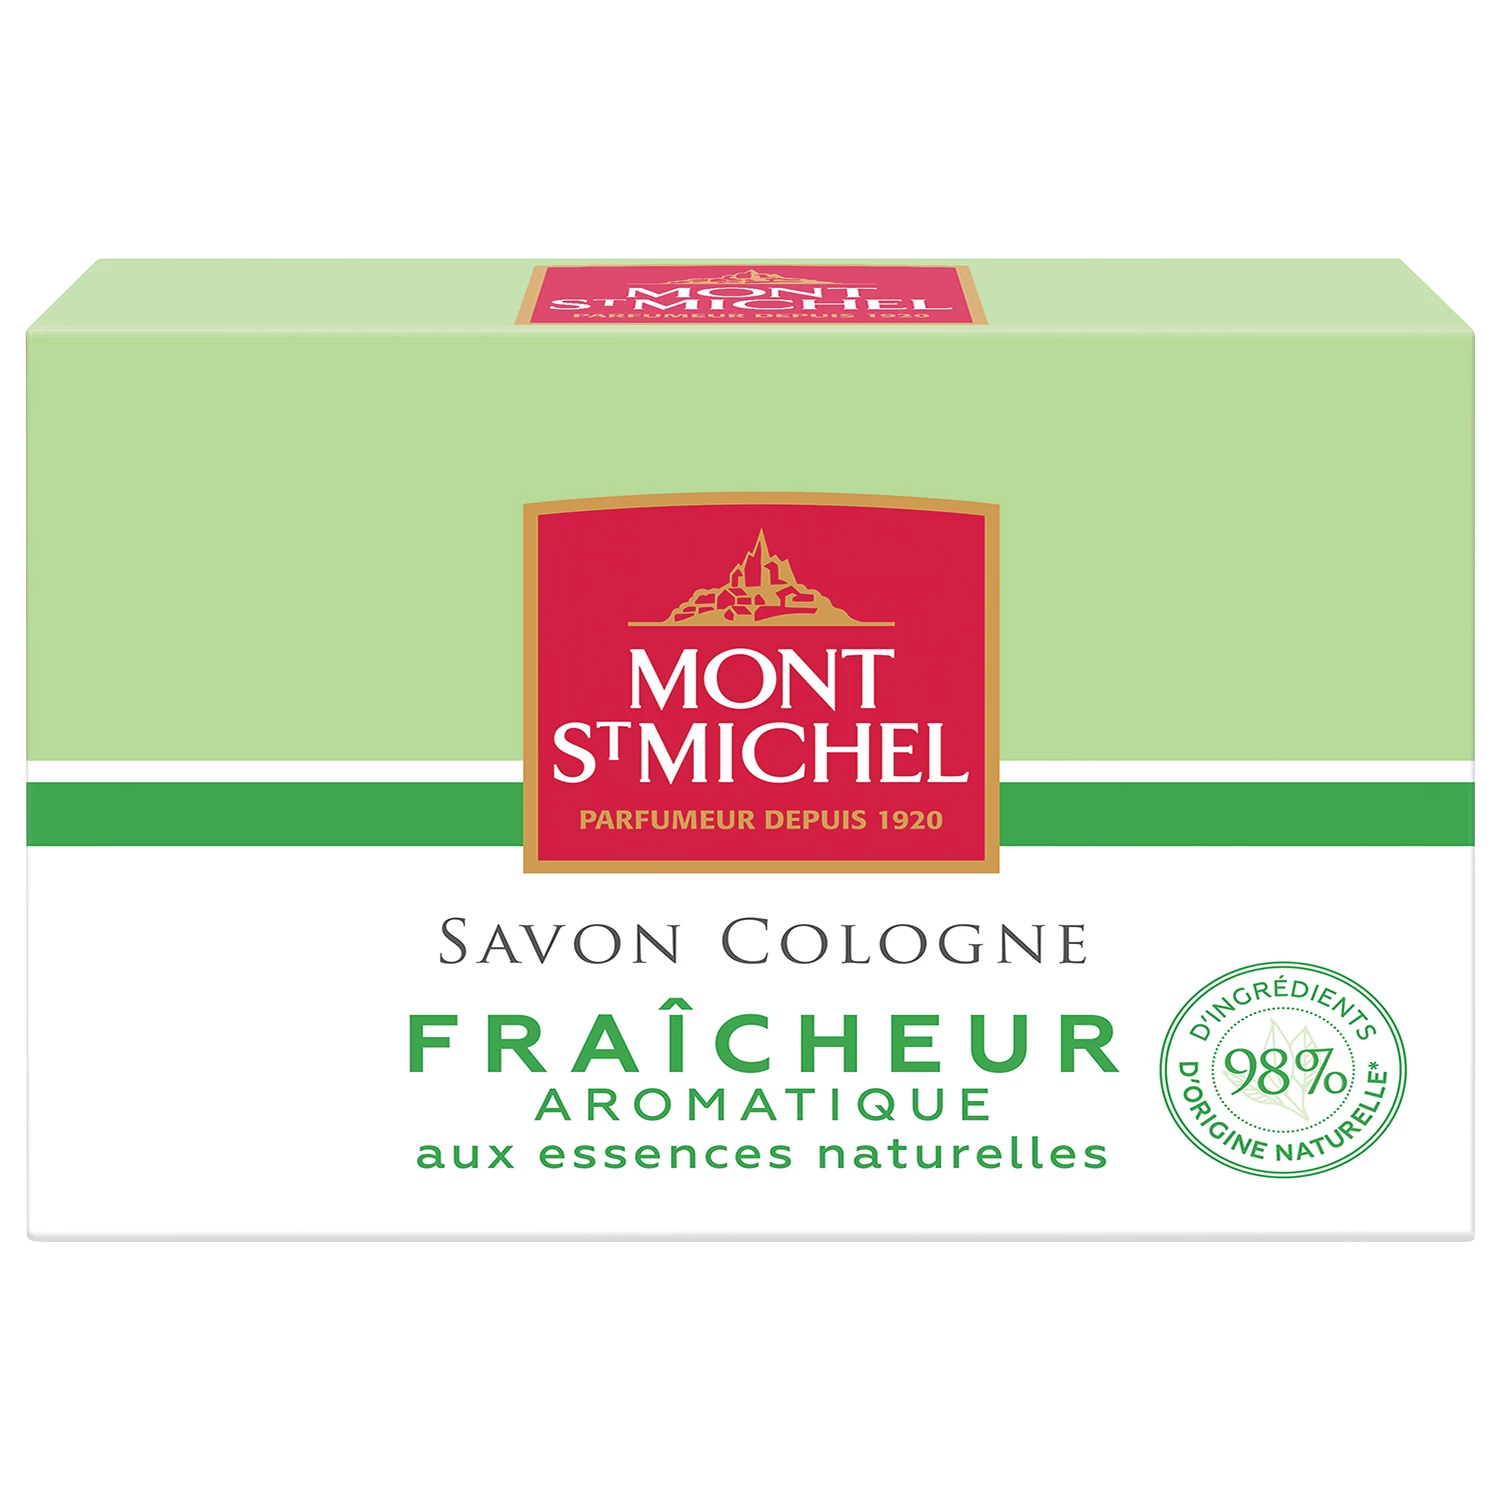 Soap Cologne aromatic freshness 125g - MONT ST MICHEL